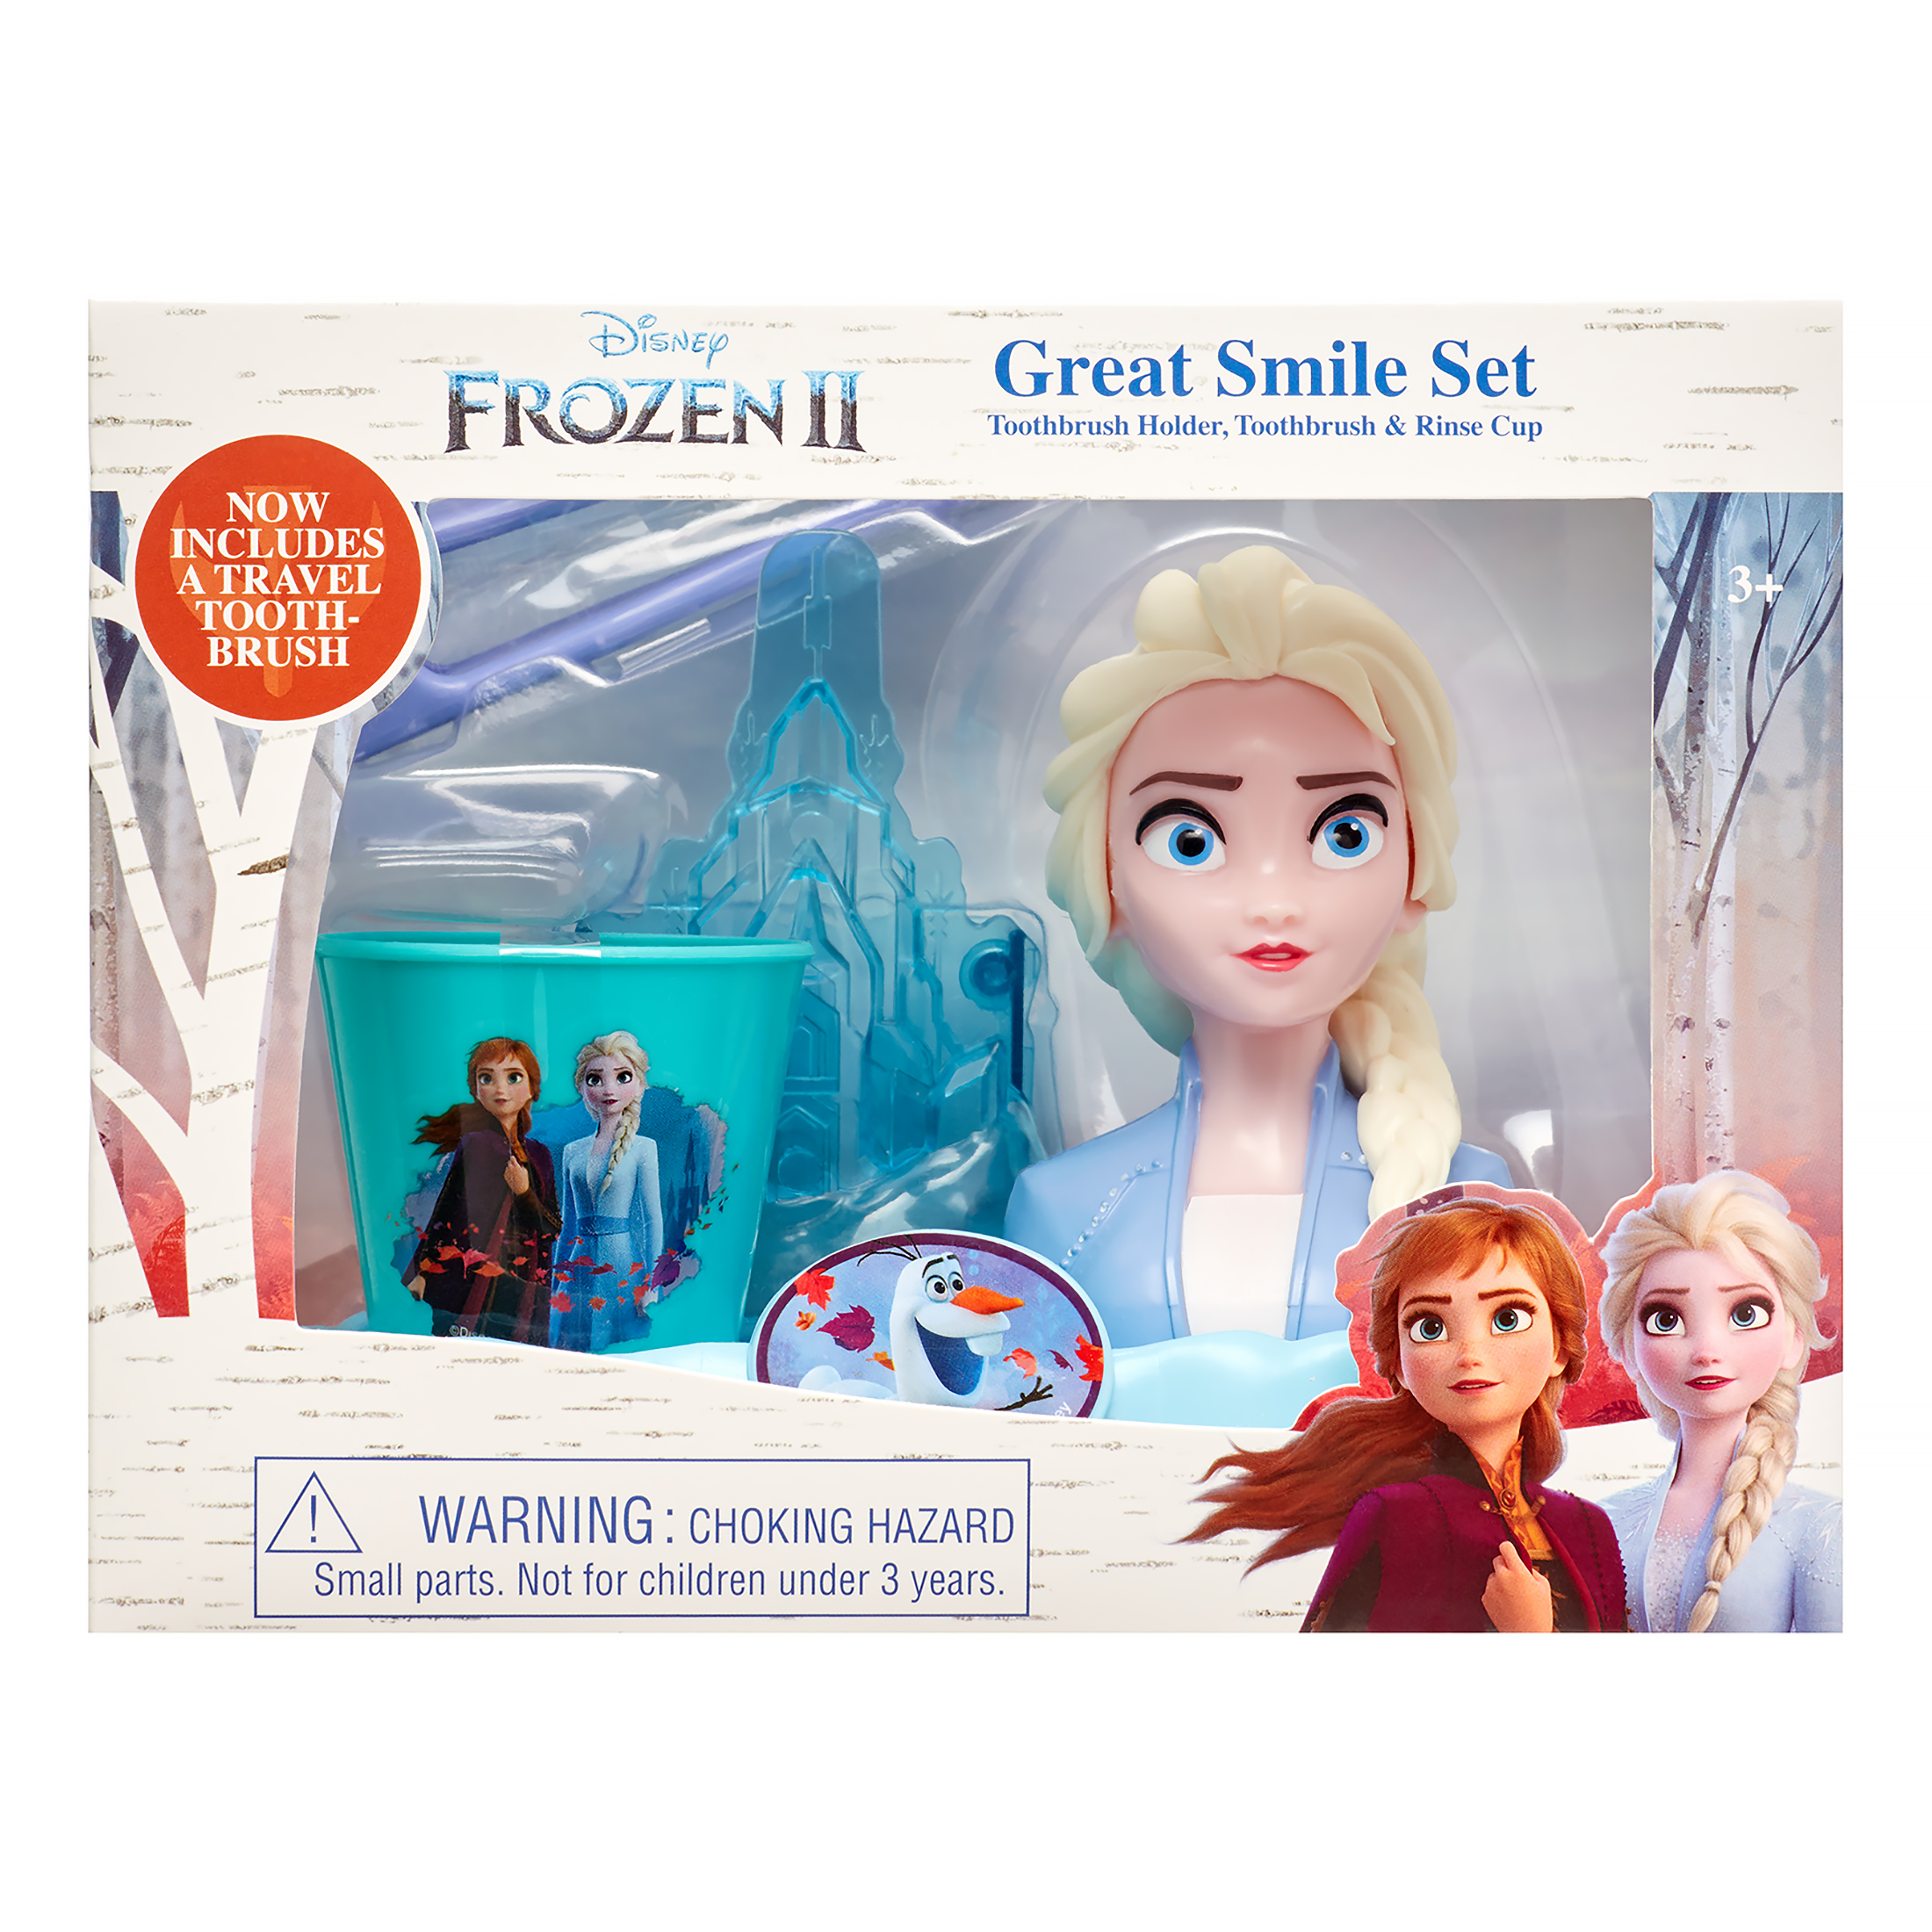 Disney Frozen II 3-Piece Great Smile Elsa Toothbrush and Holder Set - image 1 of 6